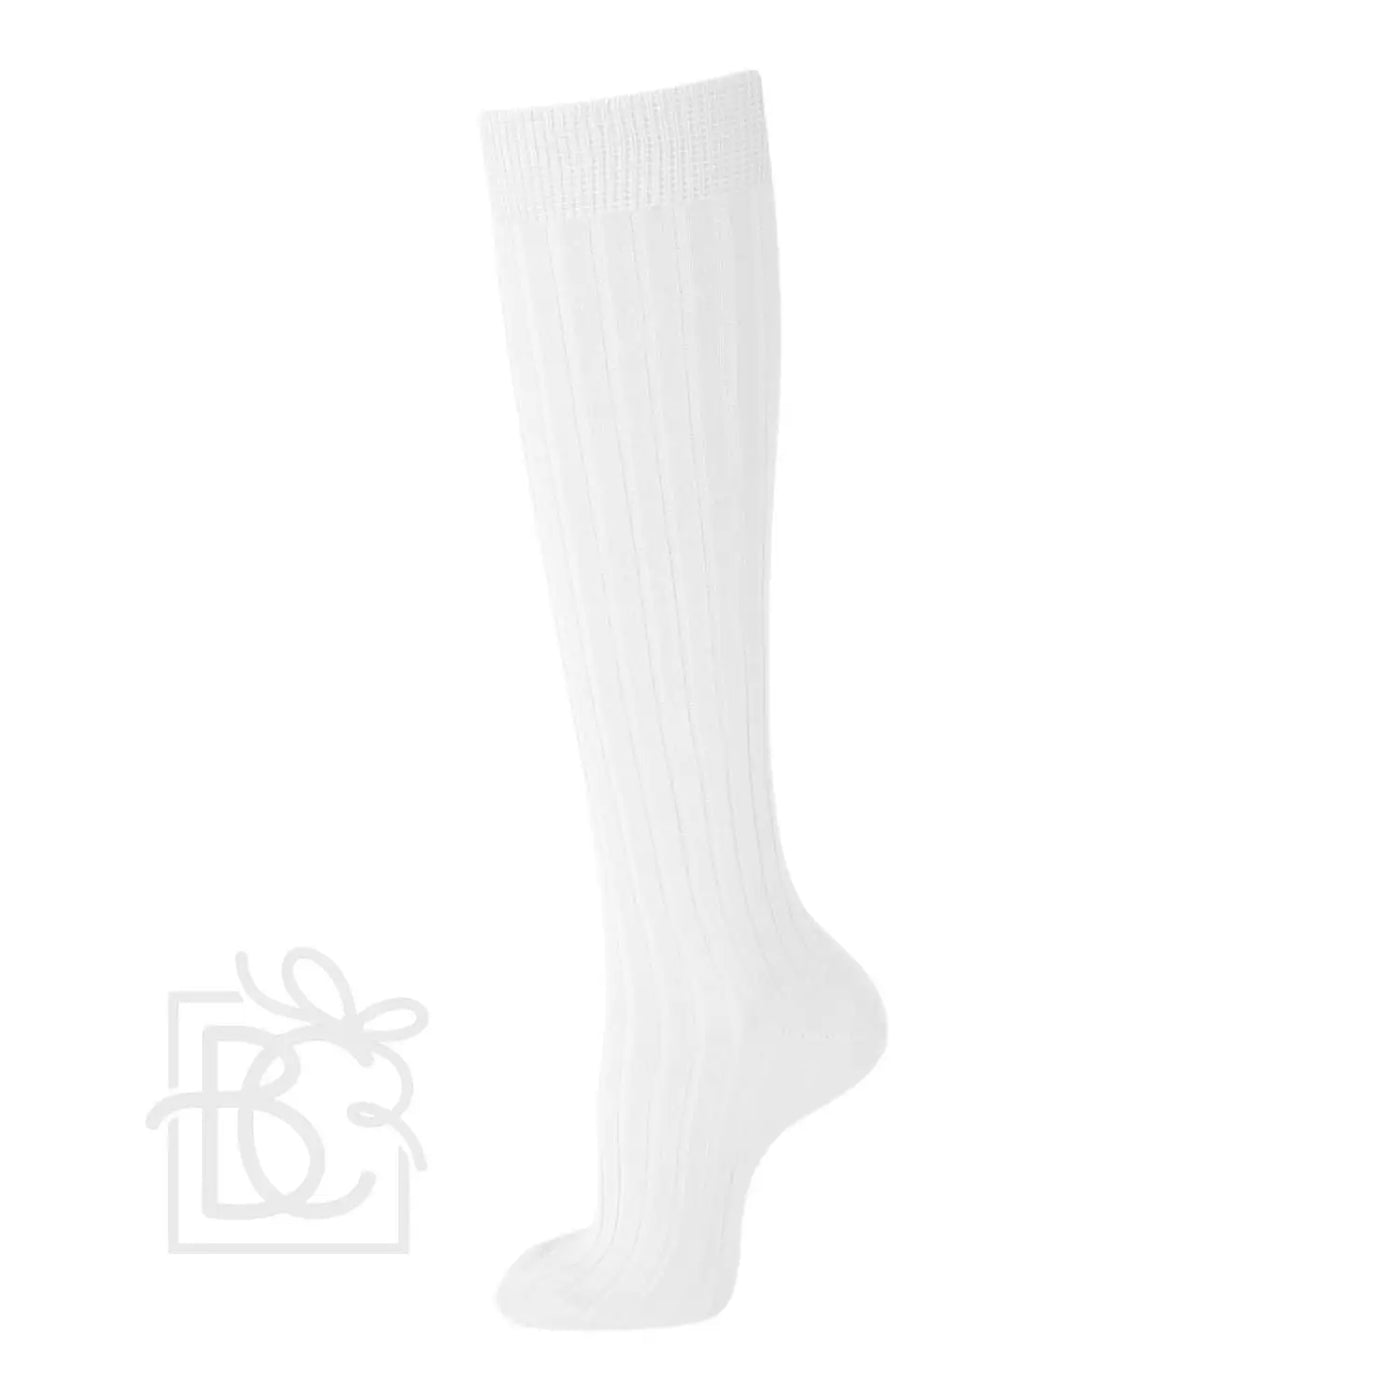 Scottish Yarn Ribbed Knee high Socks | White - Breckenridge Baby